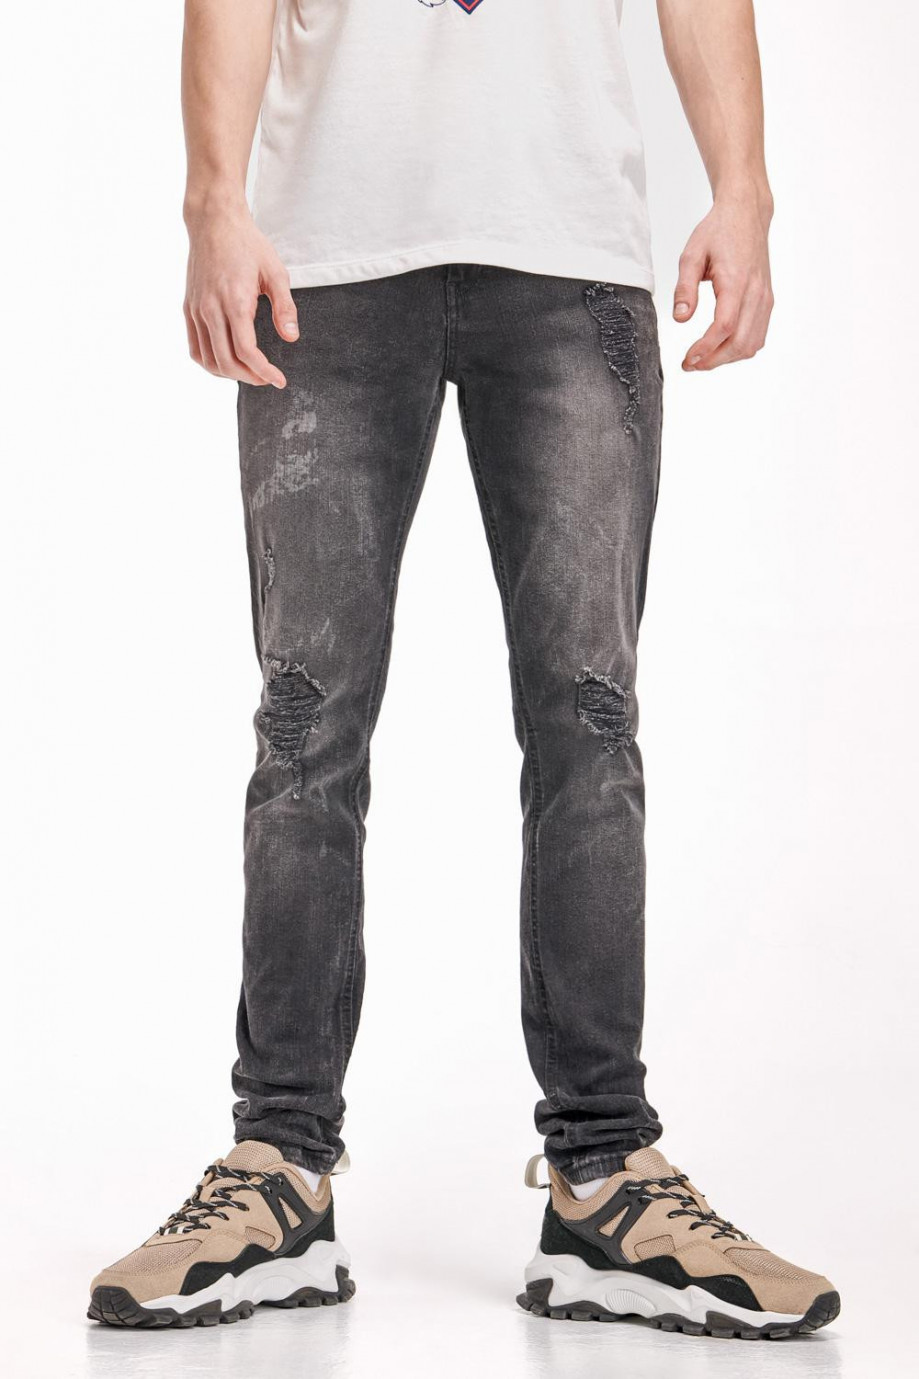 Jean gris oscuro súper skinny con rotos localizados